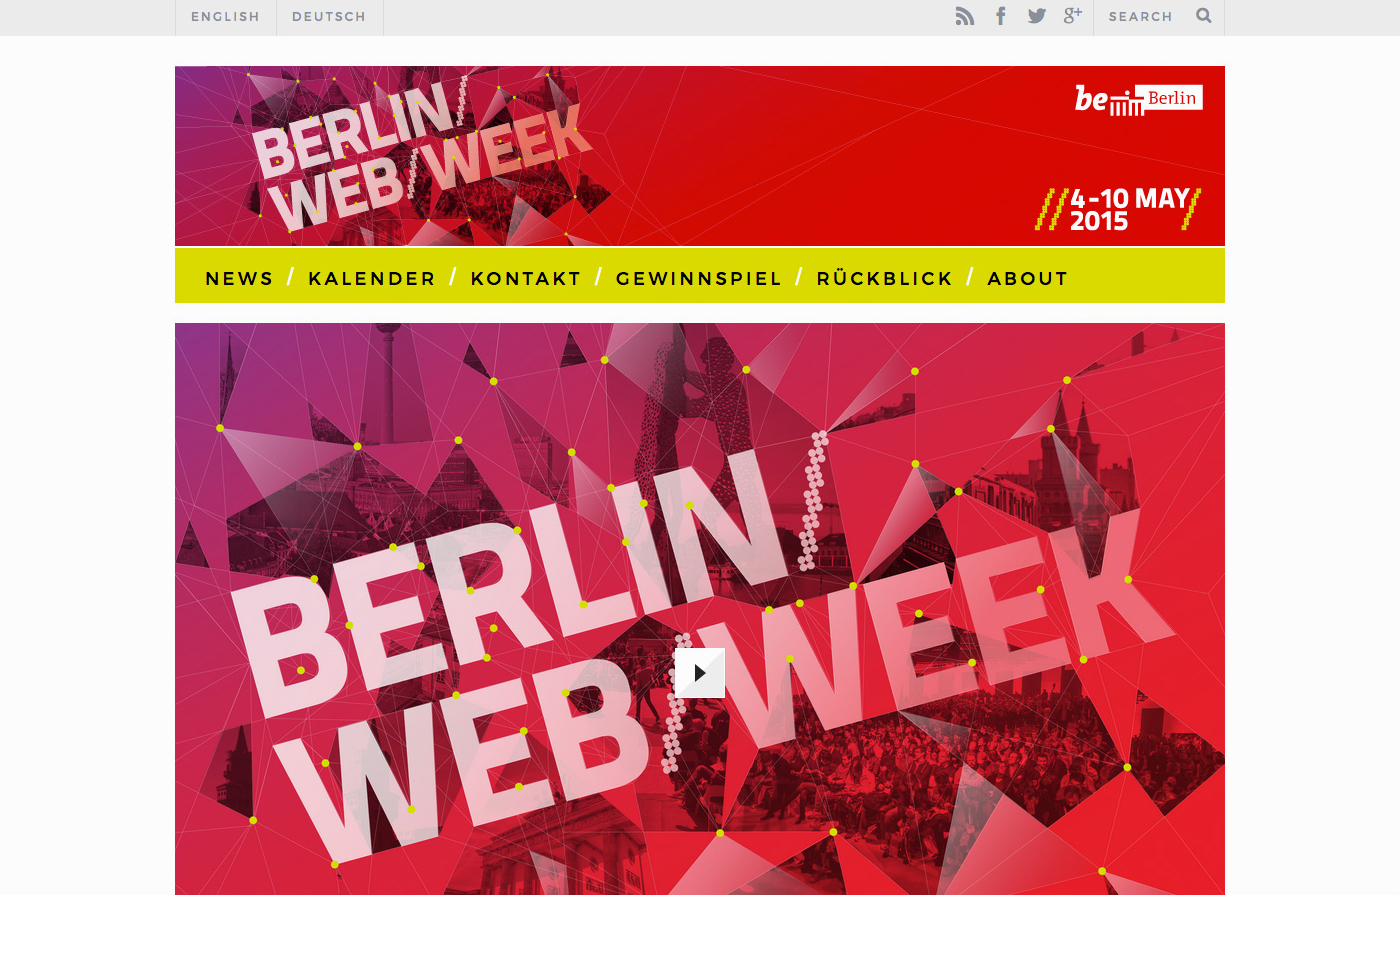 Navarts Webdesign - Berlin Webweek 2015